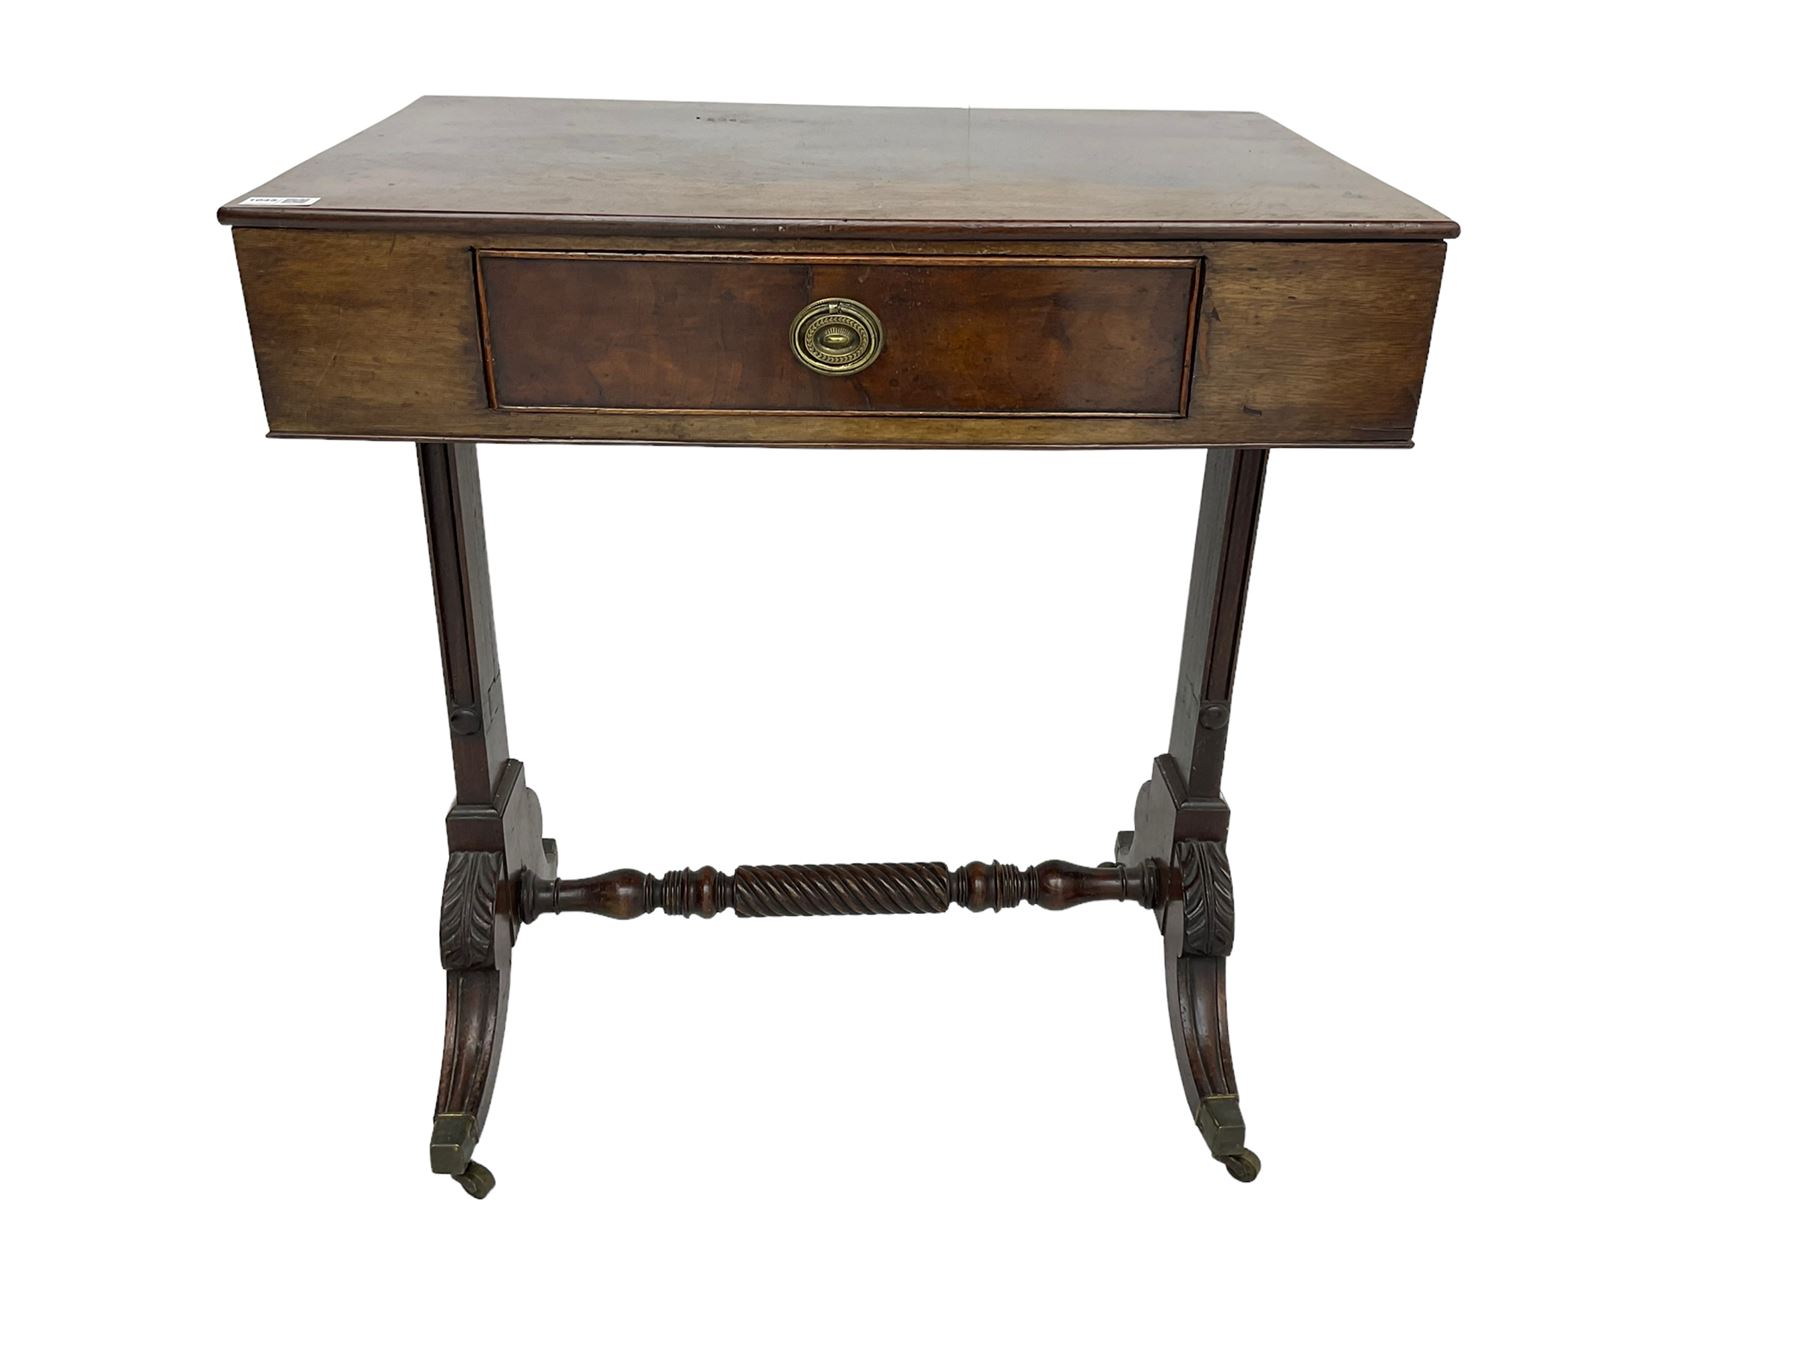 19th century mahogany side table - Image 2 of 6